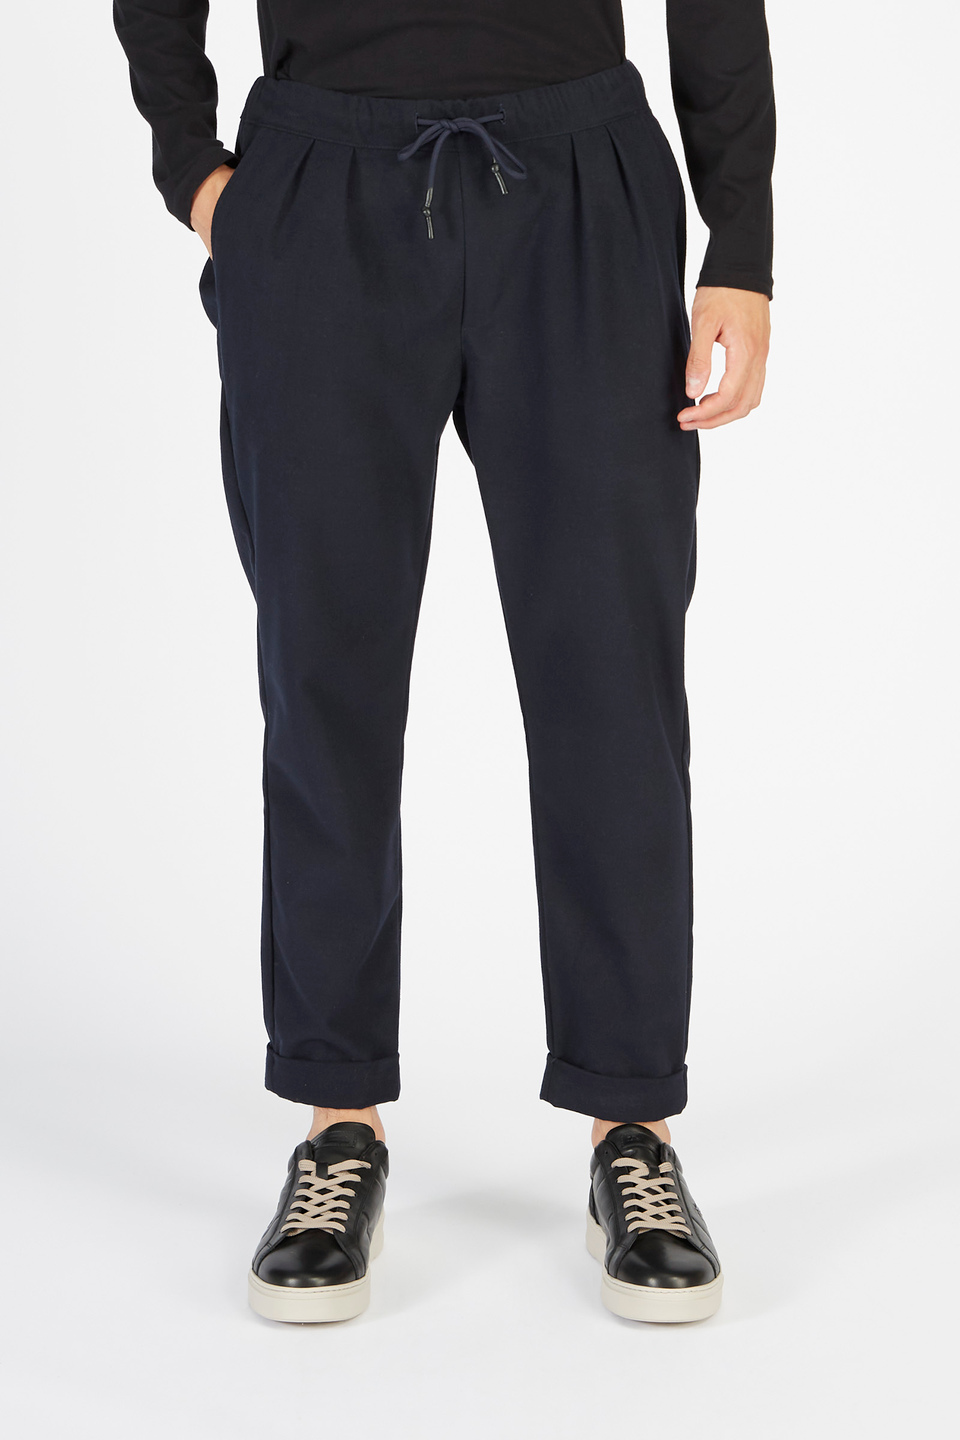 Pantalone Timeless uomo tessuto misto in flanella regular fit | La Martina - Official Online Shop